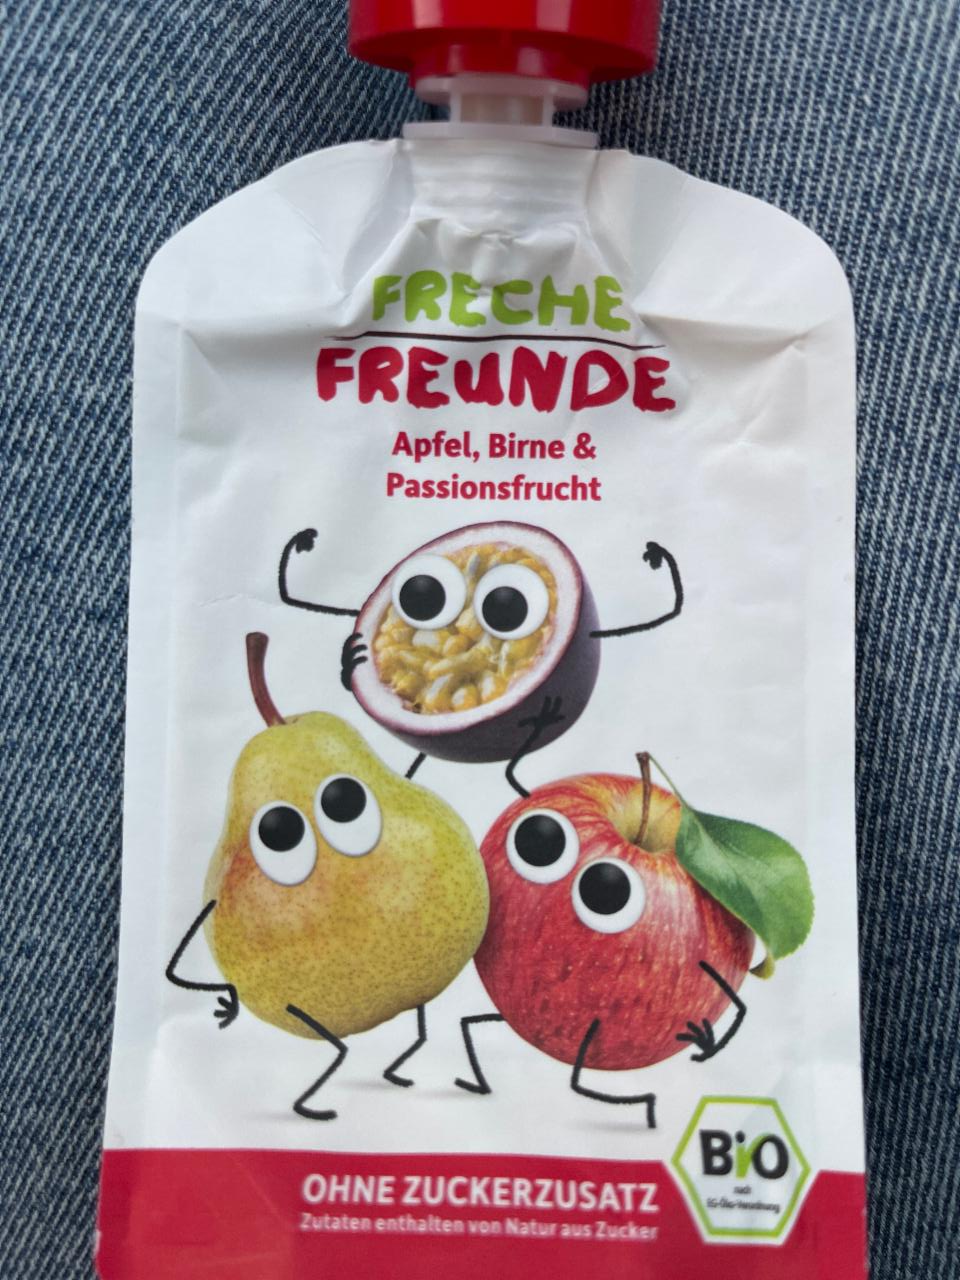 Fotografie - Freche Freunde Apfel, Birne & Passionsfrucht